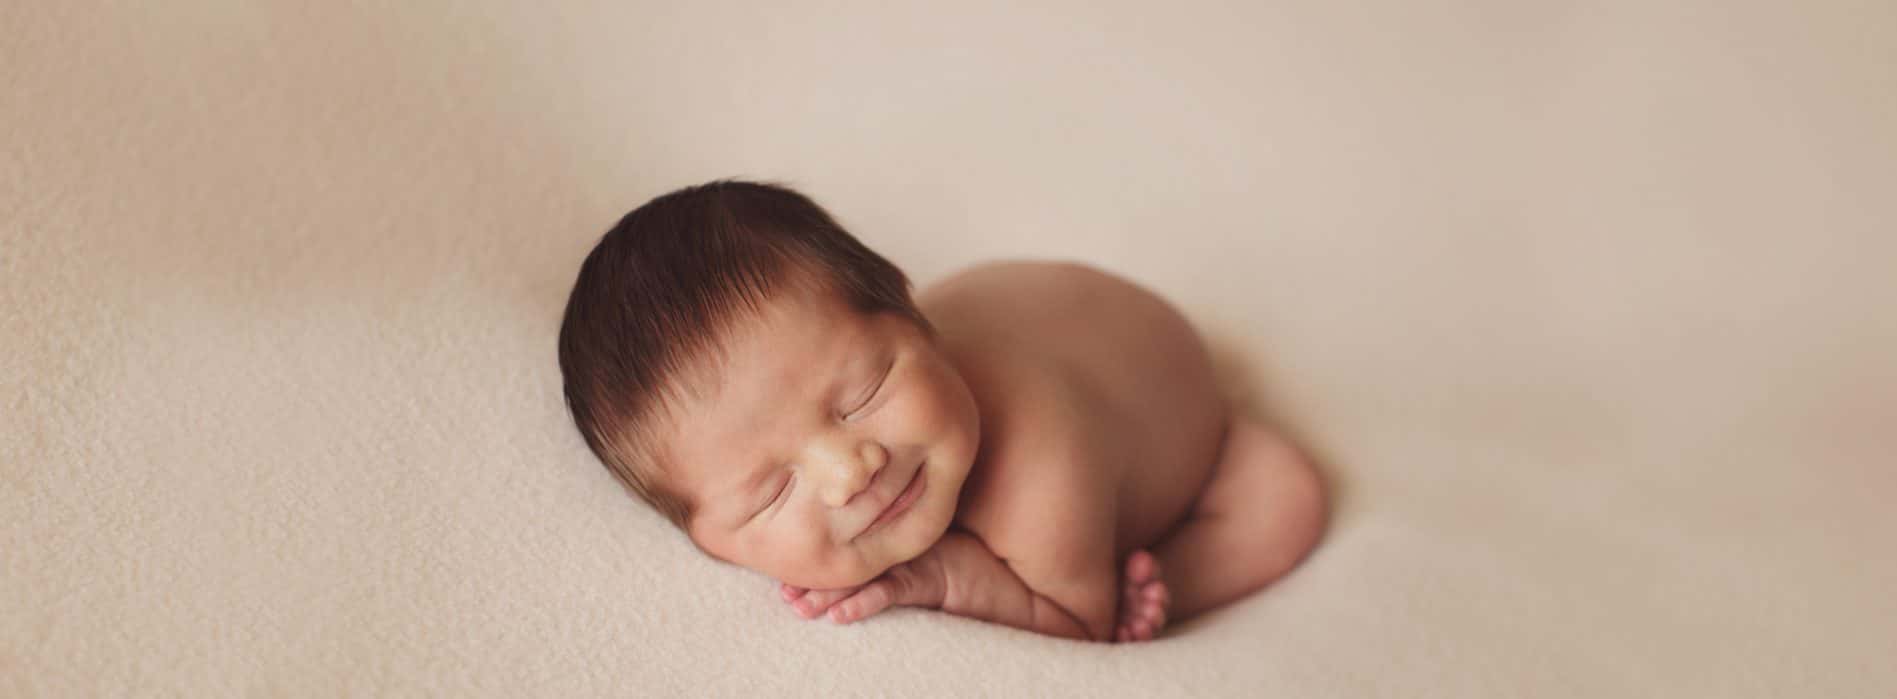 Newborn Photography Poses